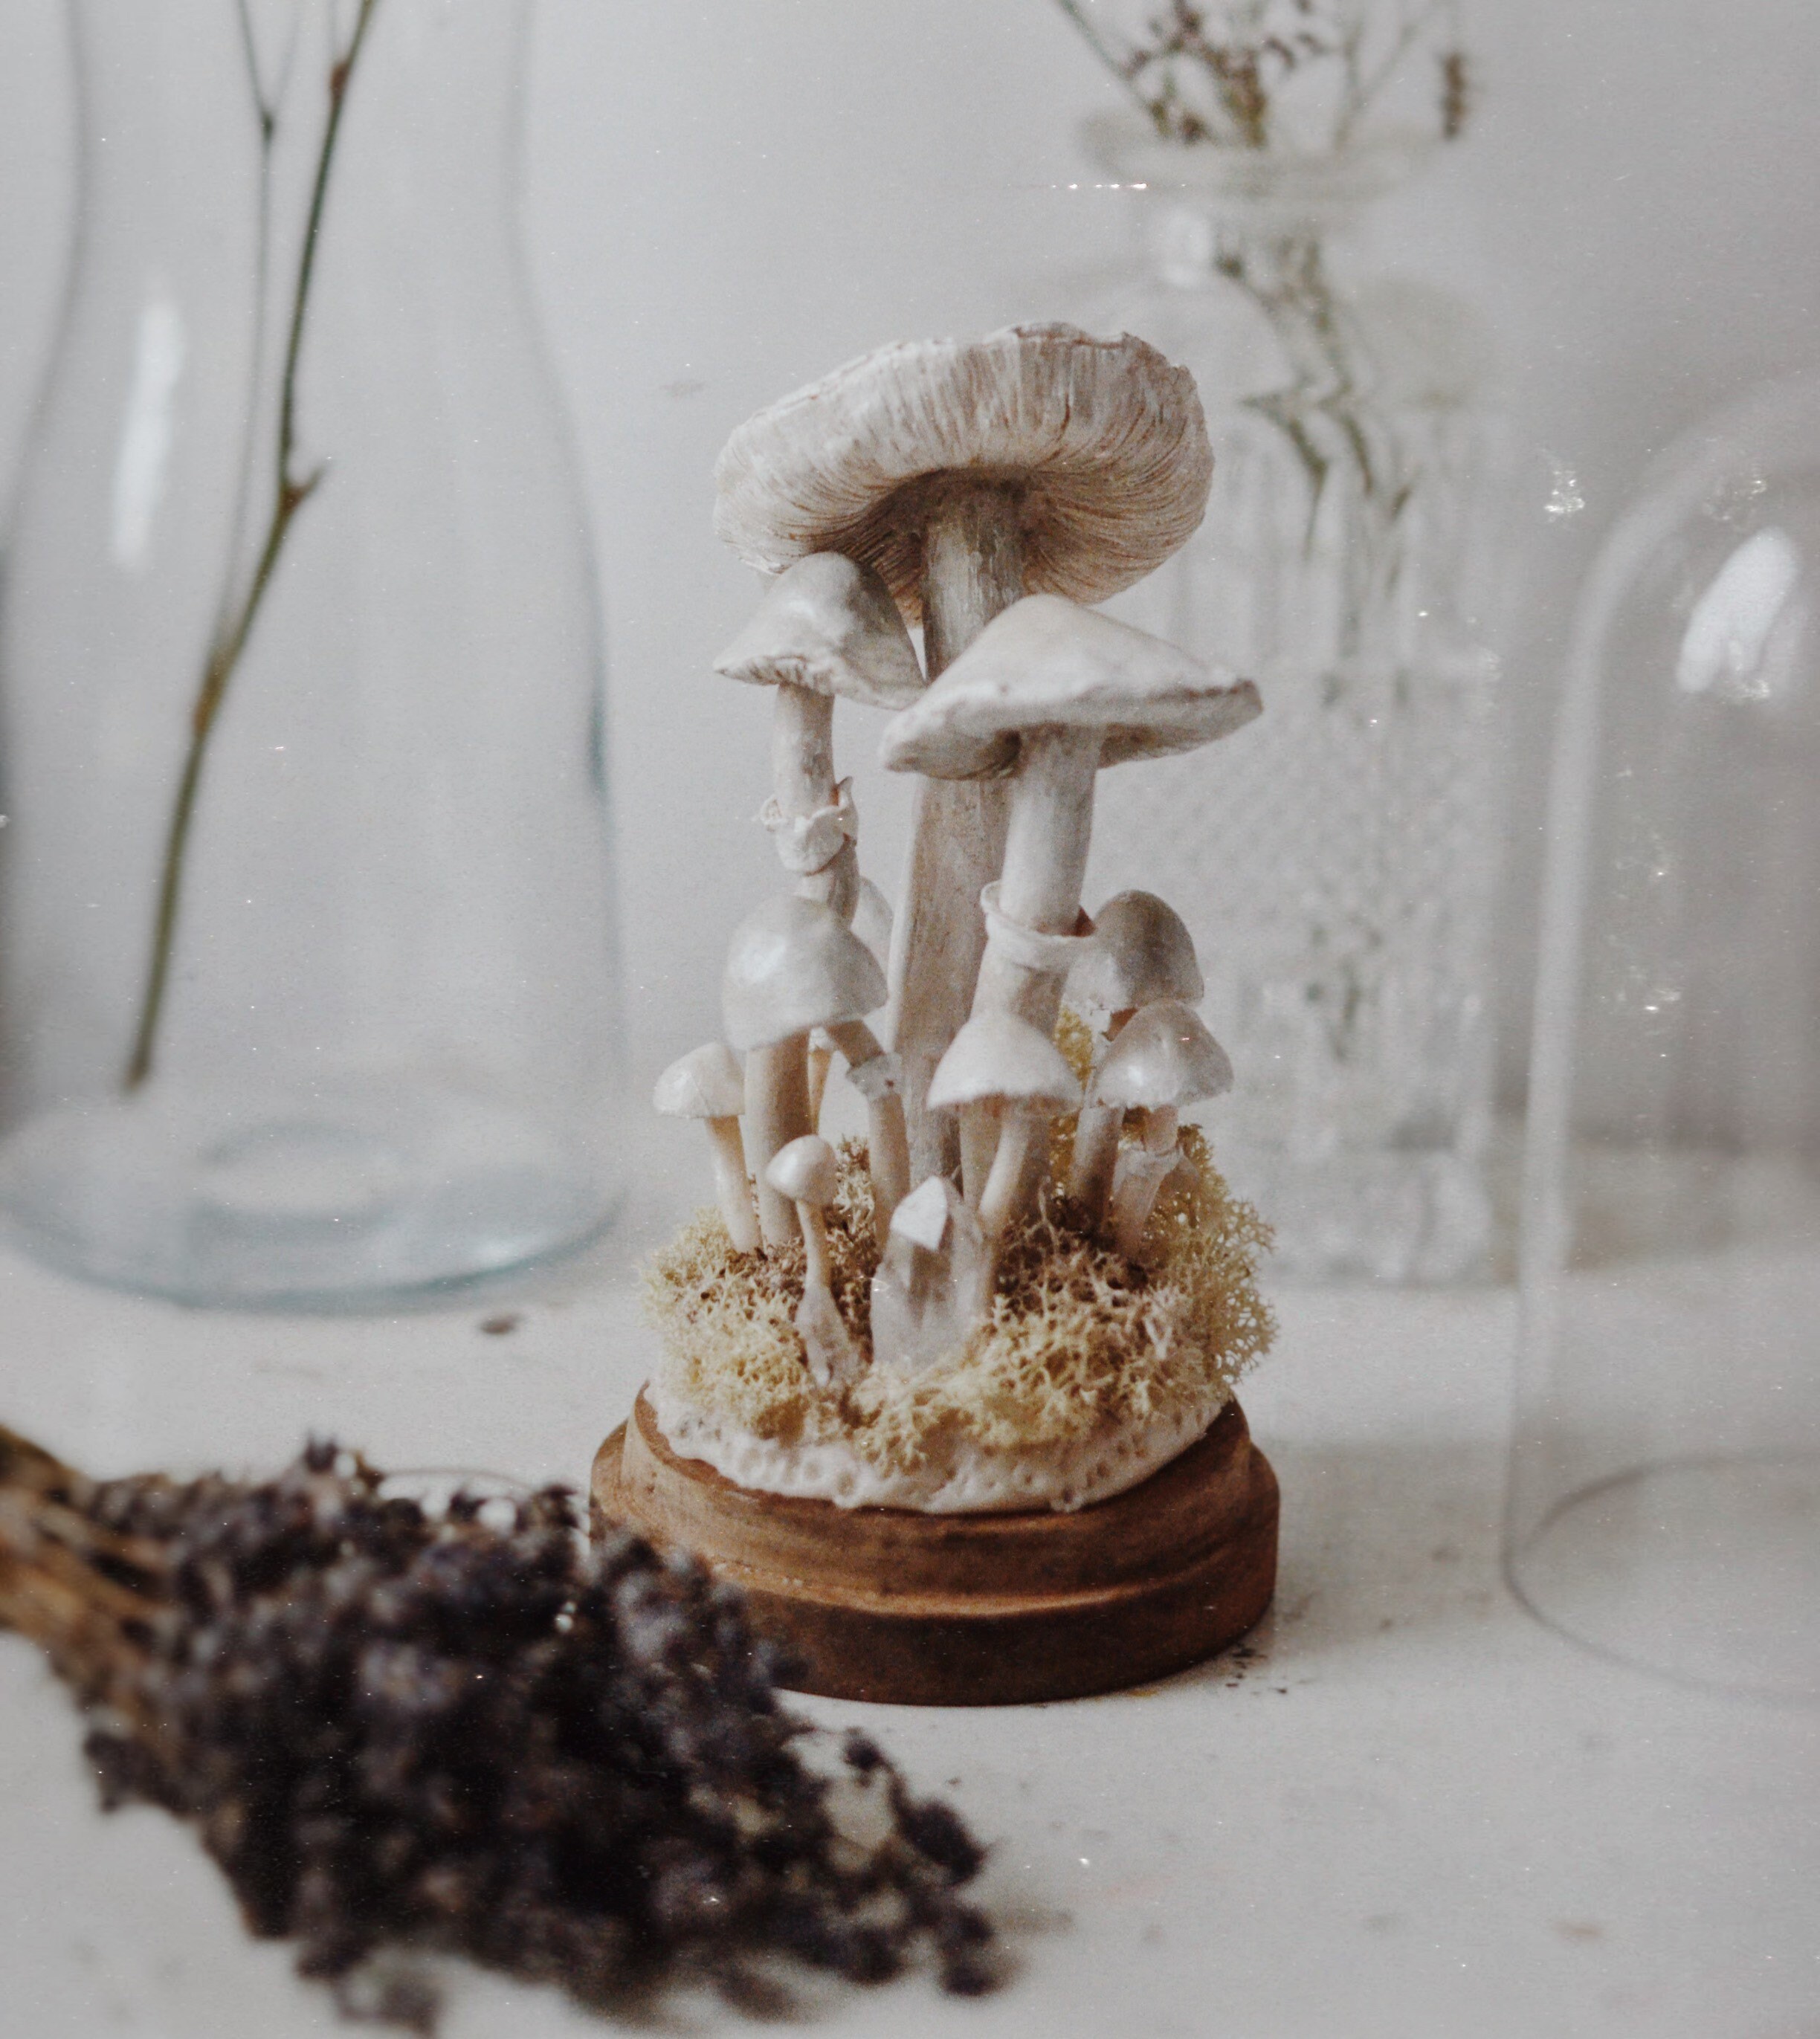 6 Red White Mushroom Artificial Fake Fairy Garden Mushrooms